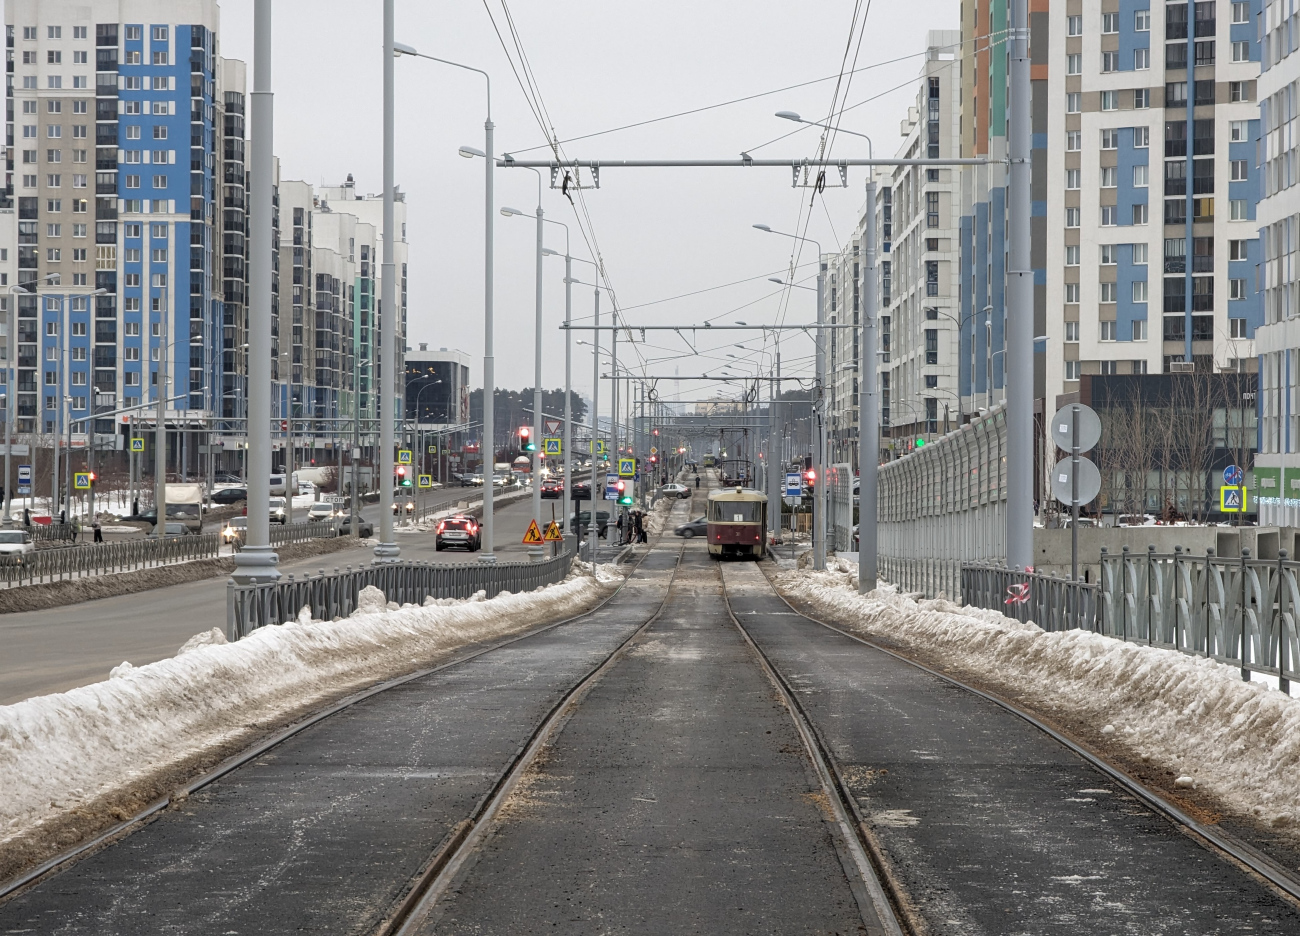 Jekaterinburg — Tram lines